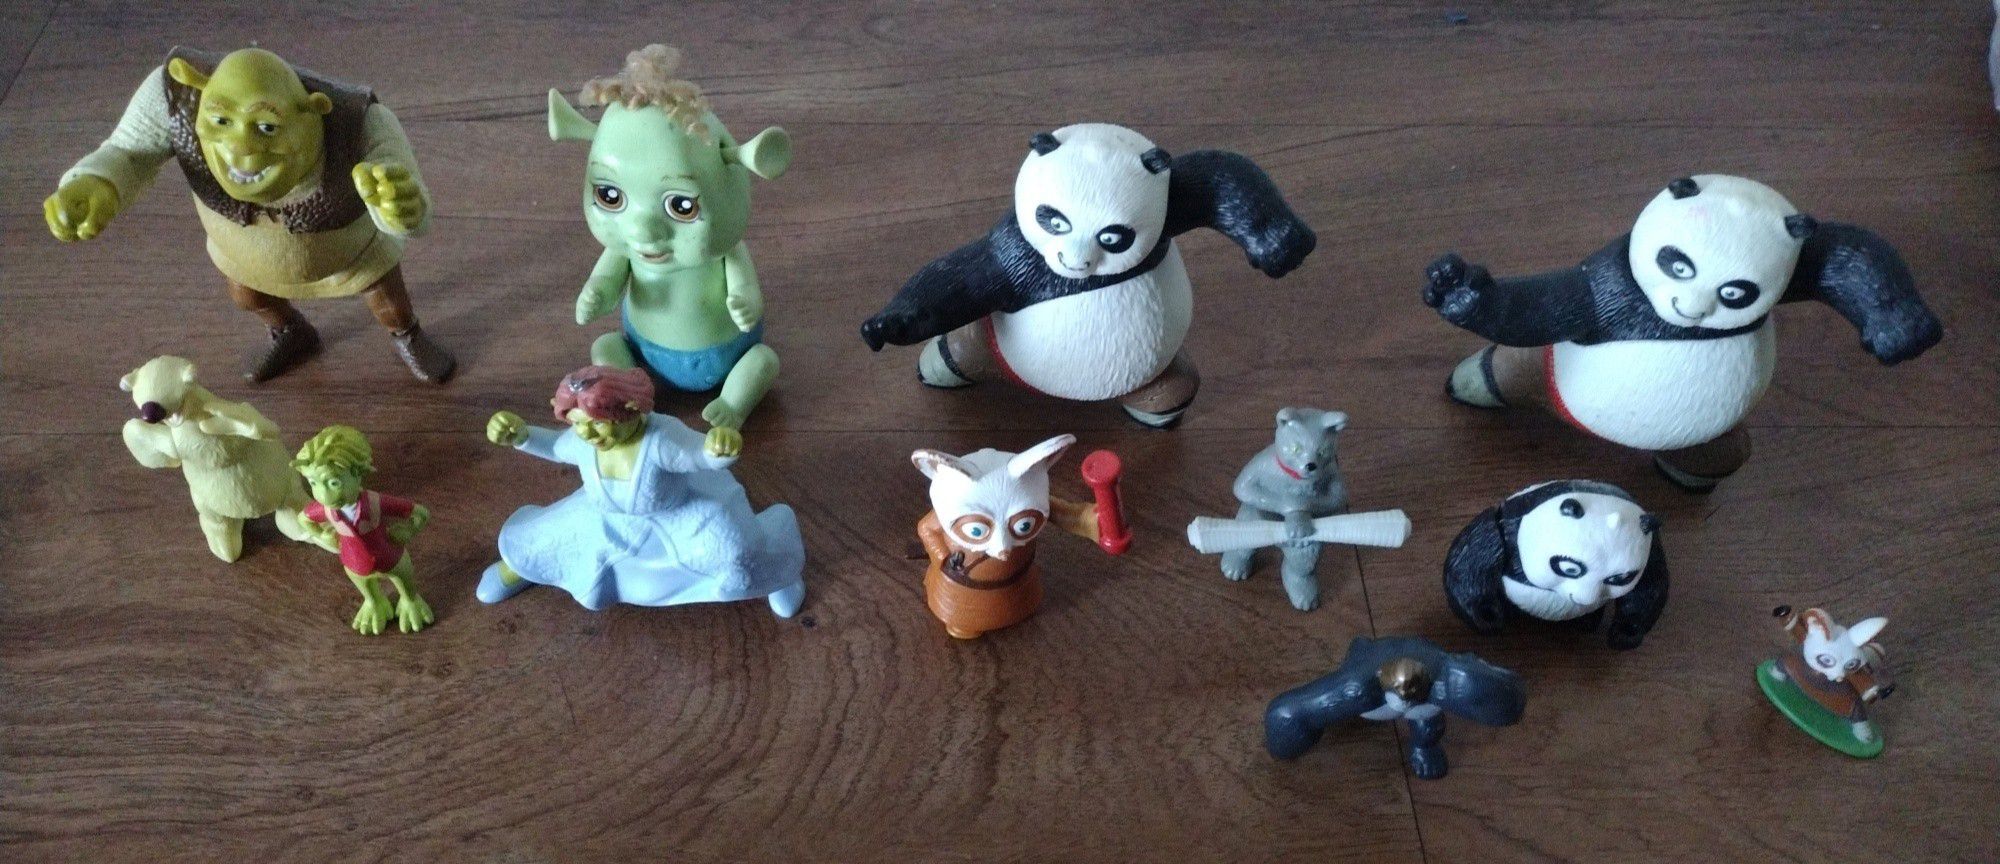 Shrek Fiona Baby Sid Alien& Pandas Master Chifu Classic Toys $12 Cash Available Now 